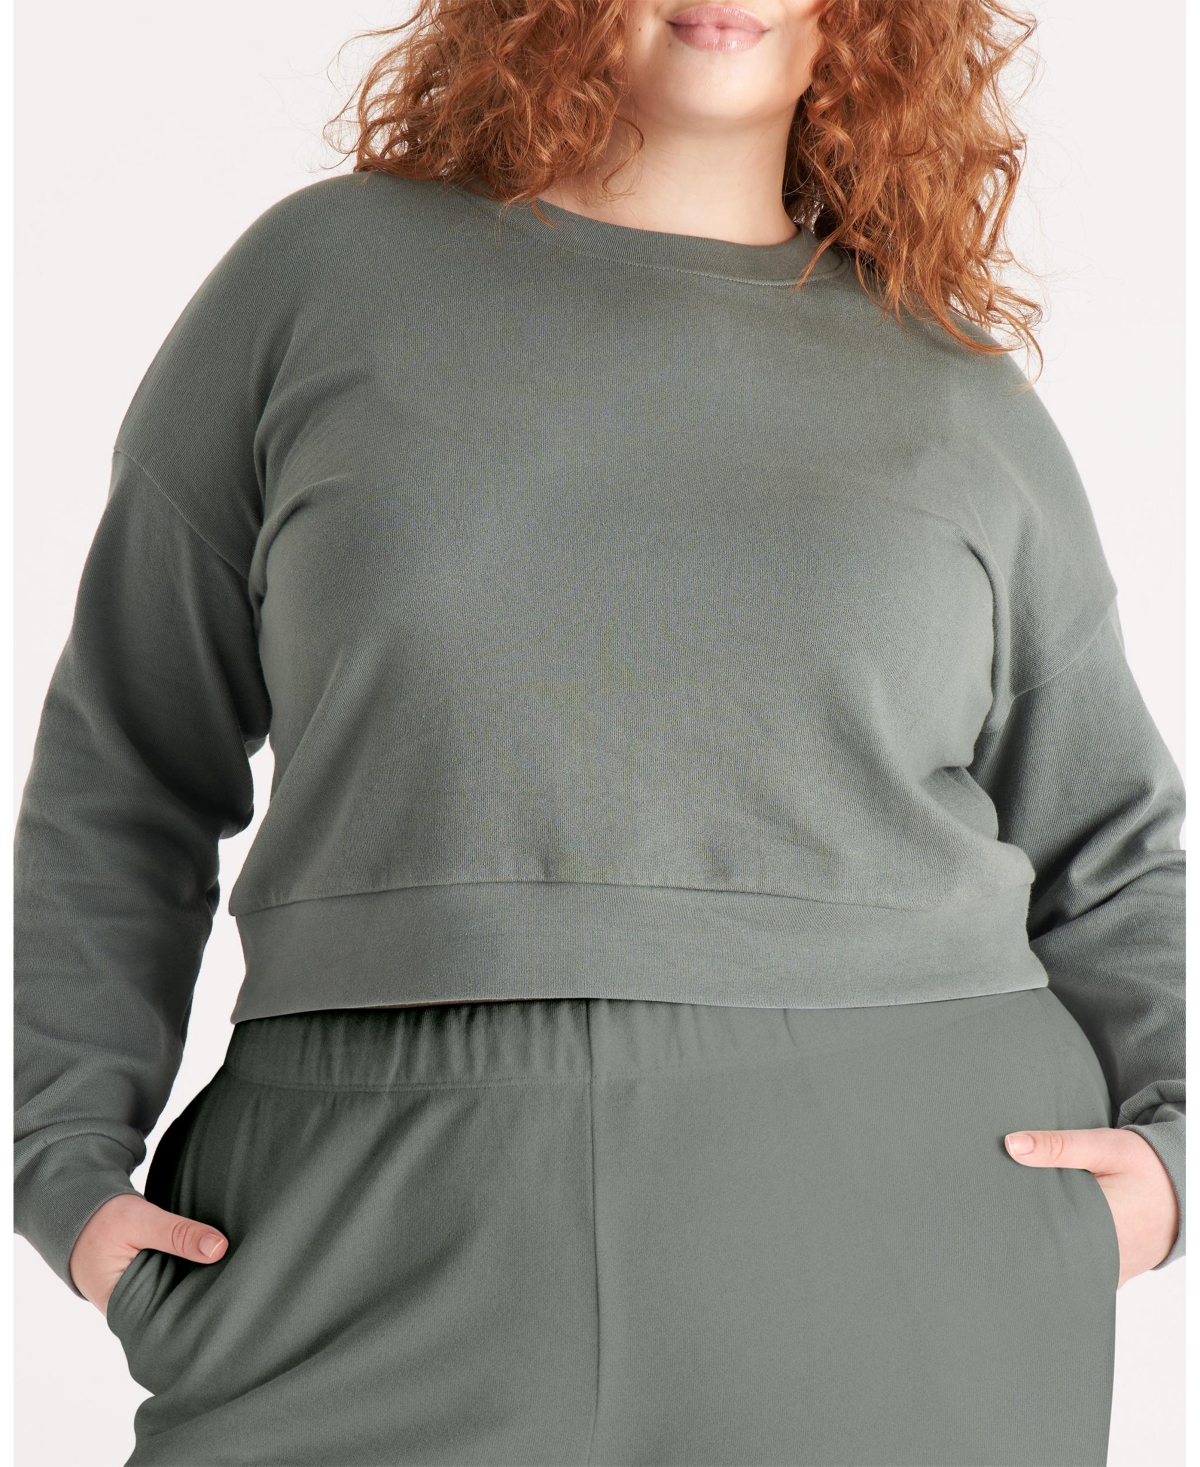  The Women's Cropped Sweatshirt- Plus Size